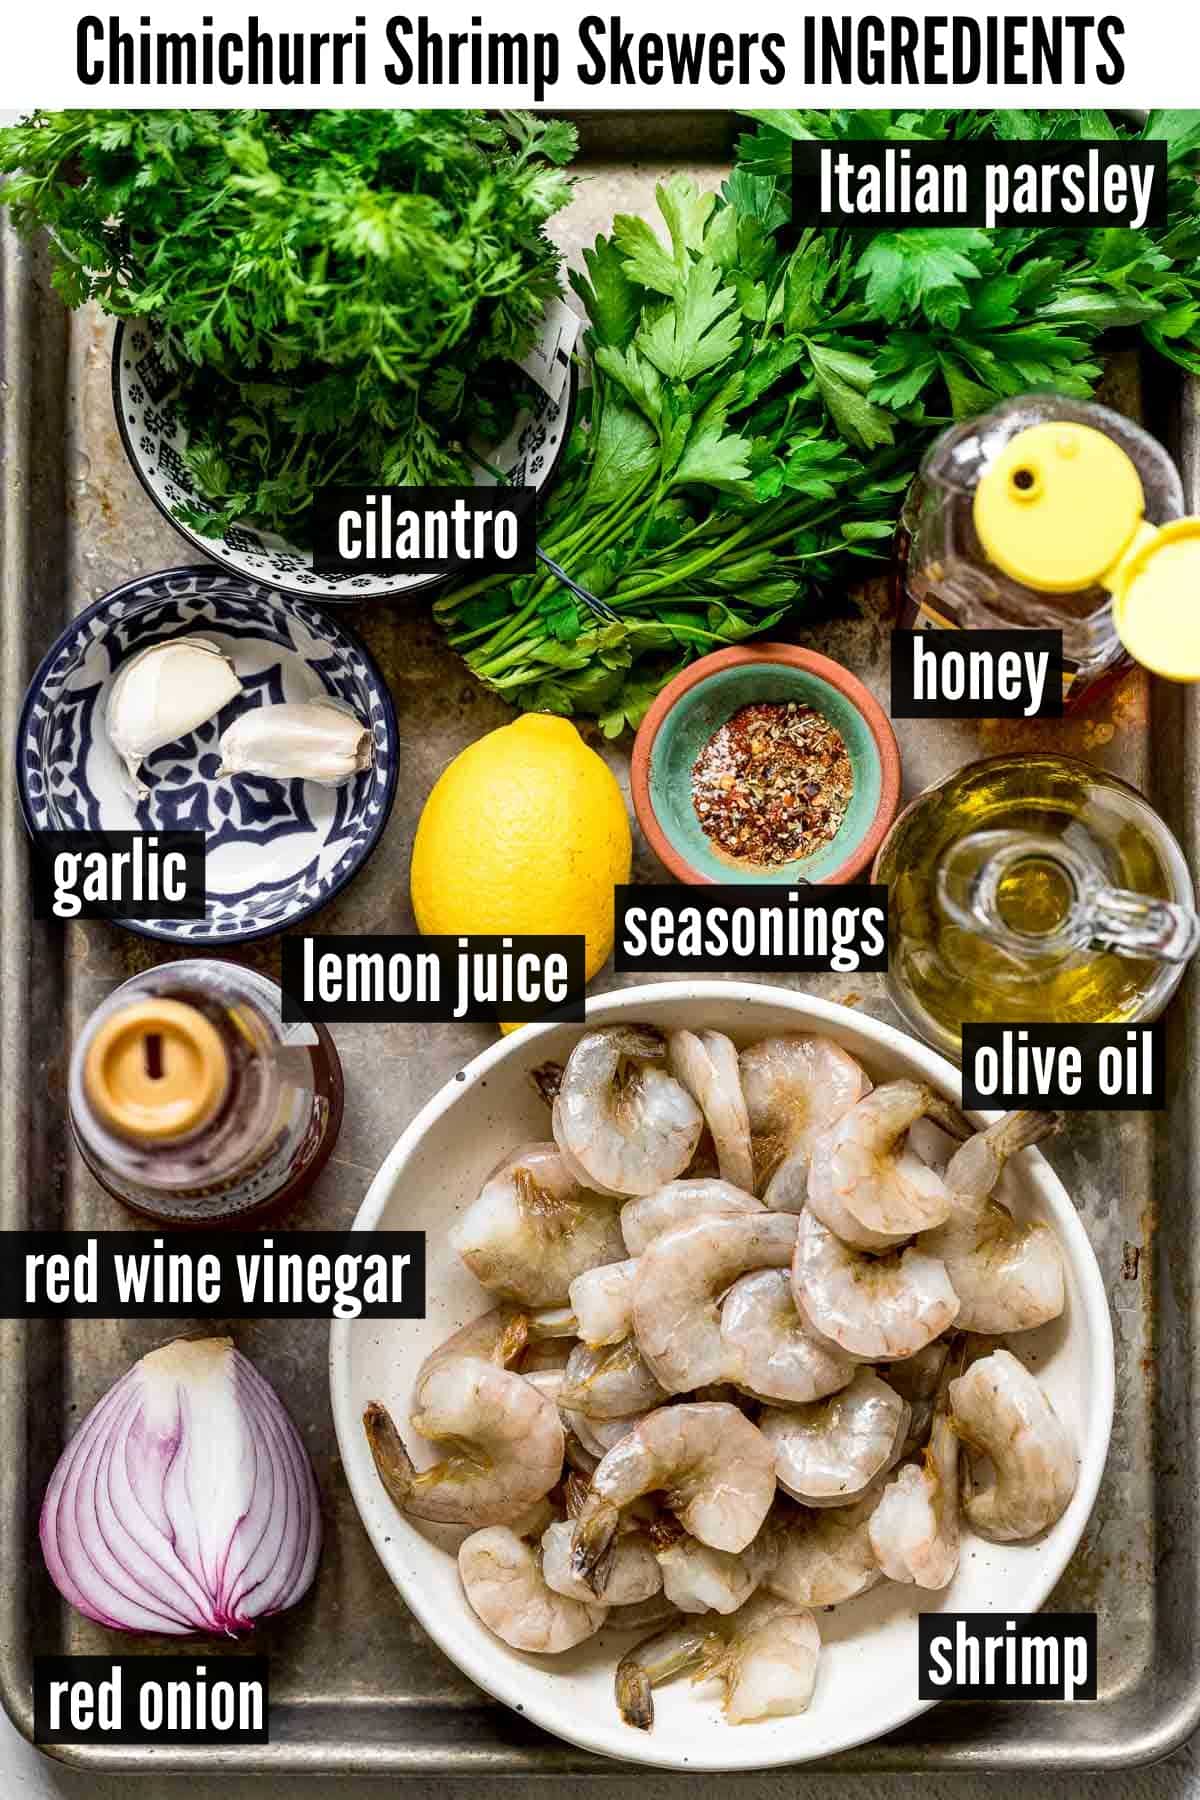 chimichurri grilled shrimp skewers labelled ingredients.